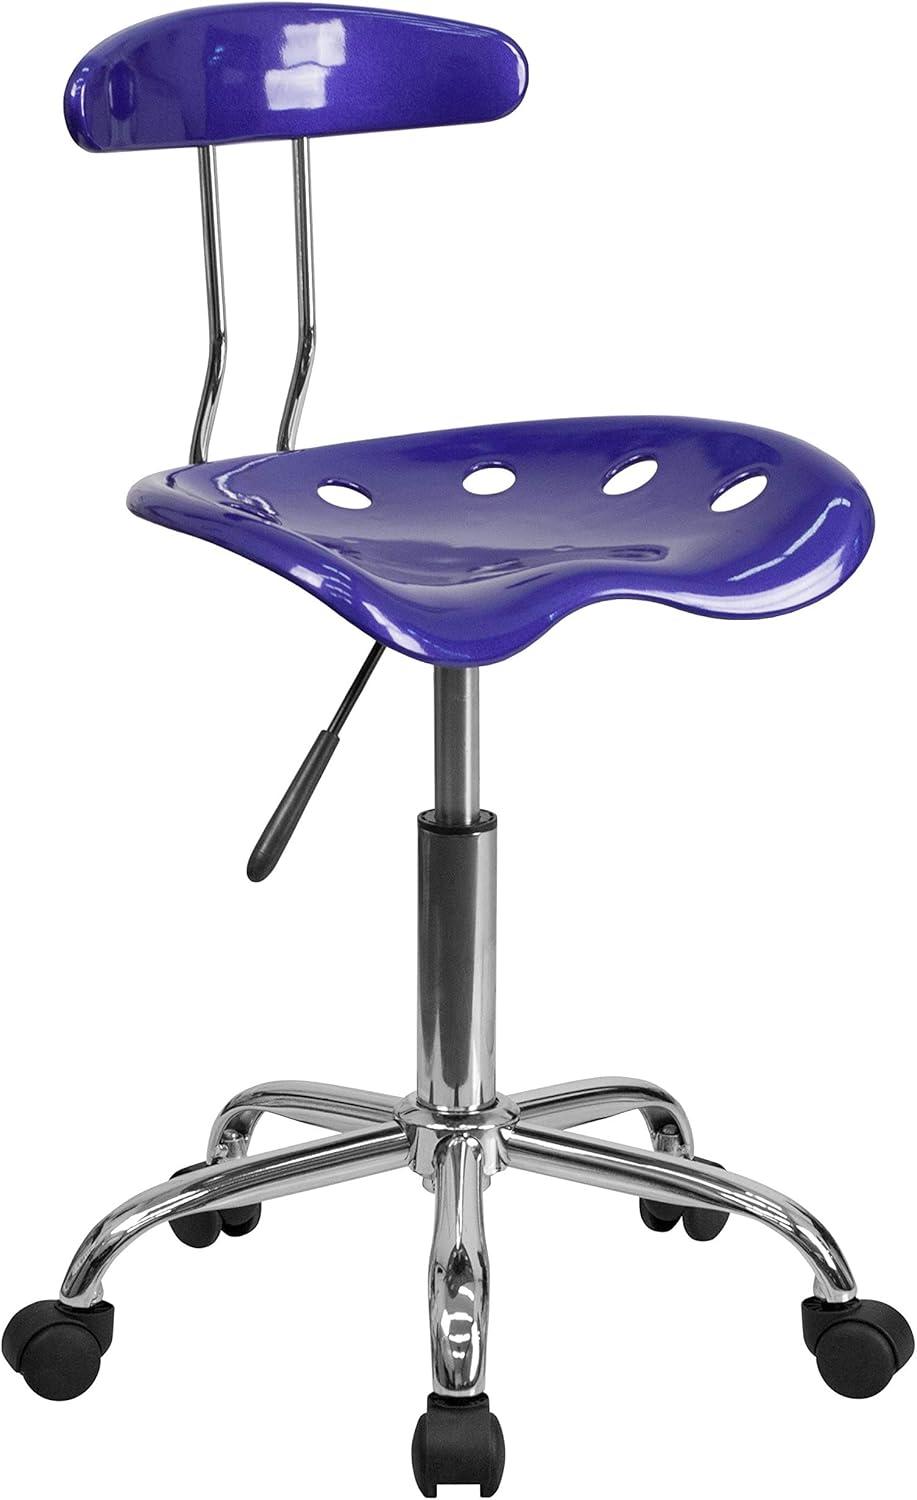 Elliott Vibrant Bright Blue Chrome Swivel Task Chair with Tractor Seat